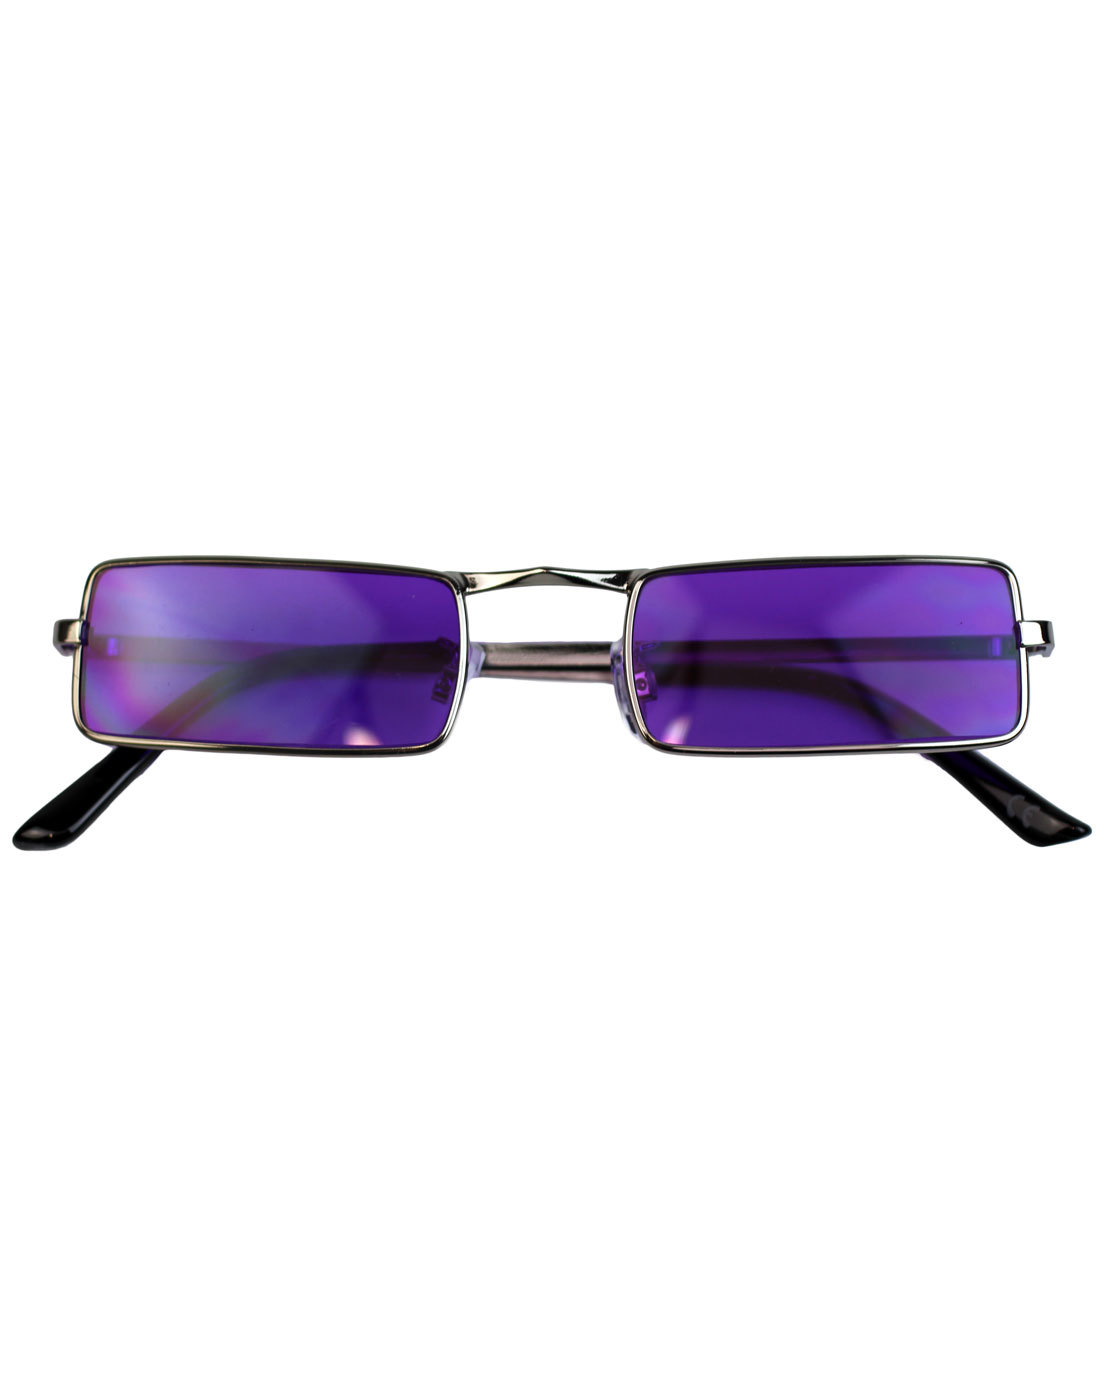 Madcap England Mcguinn 60s Mod Psychedelic Granny Glasses Purple